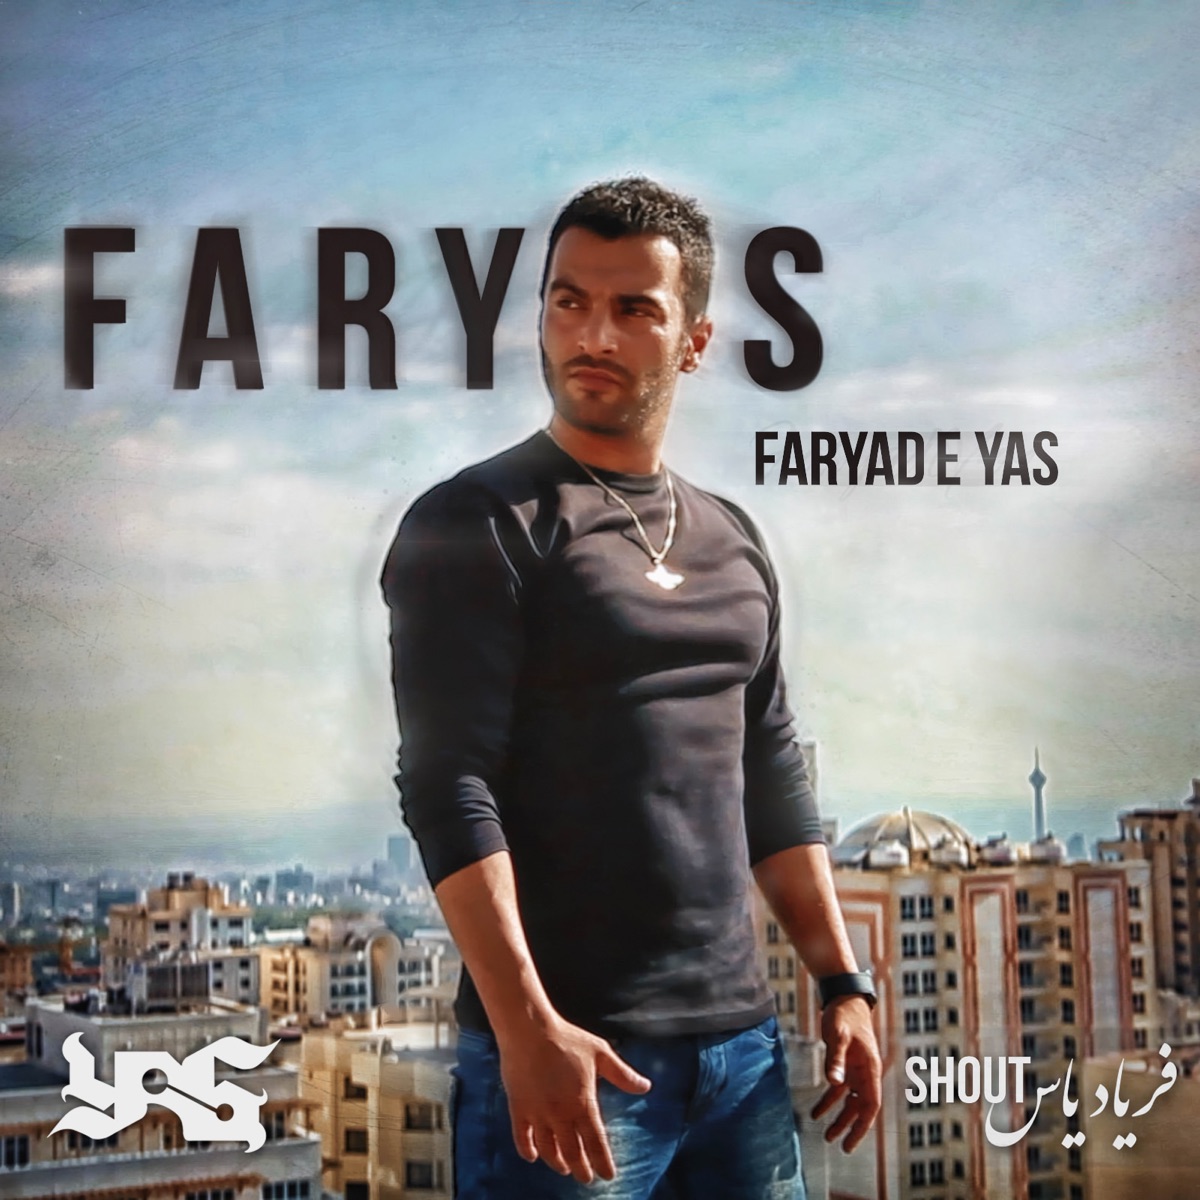 ‎Faryas (Faryade Yas) - Shout - فریاد یاس - Single by Yas on iTunes